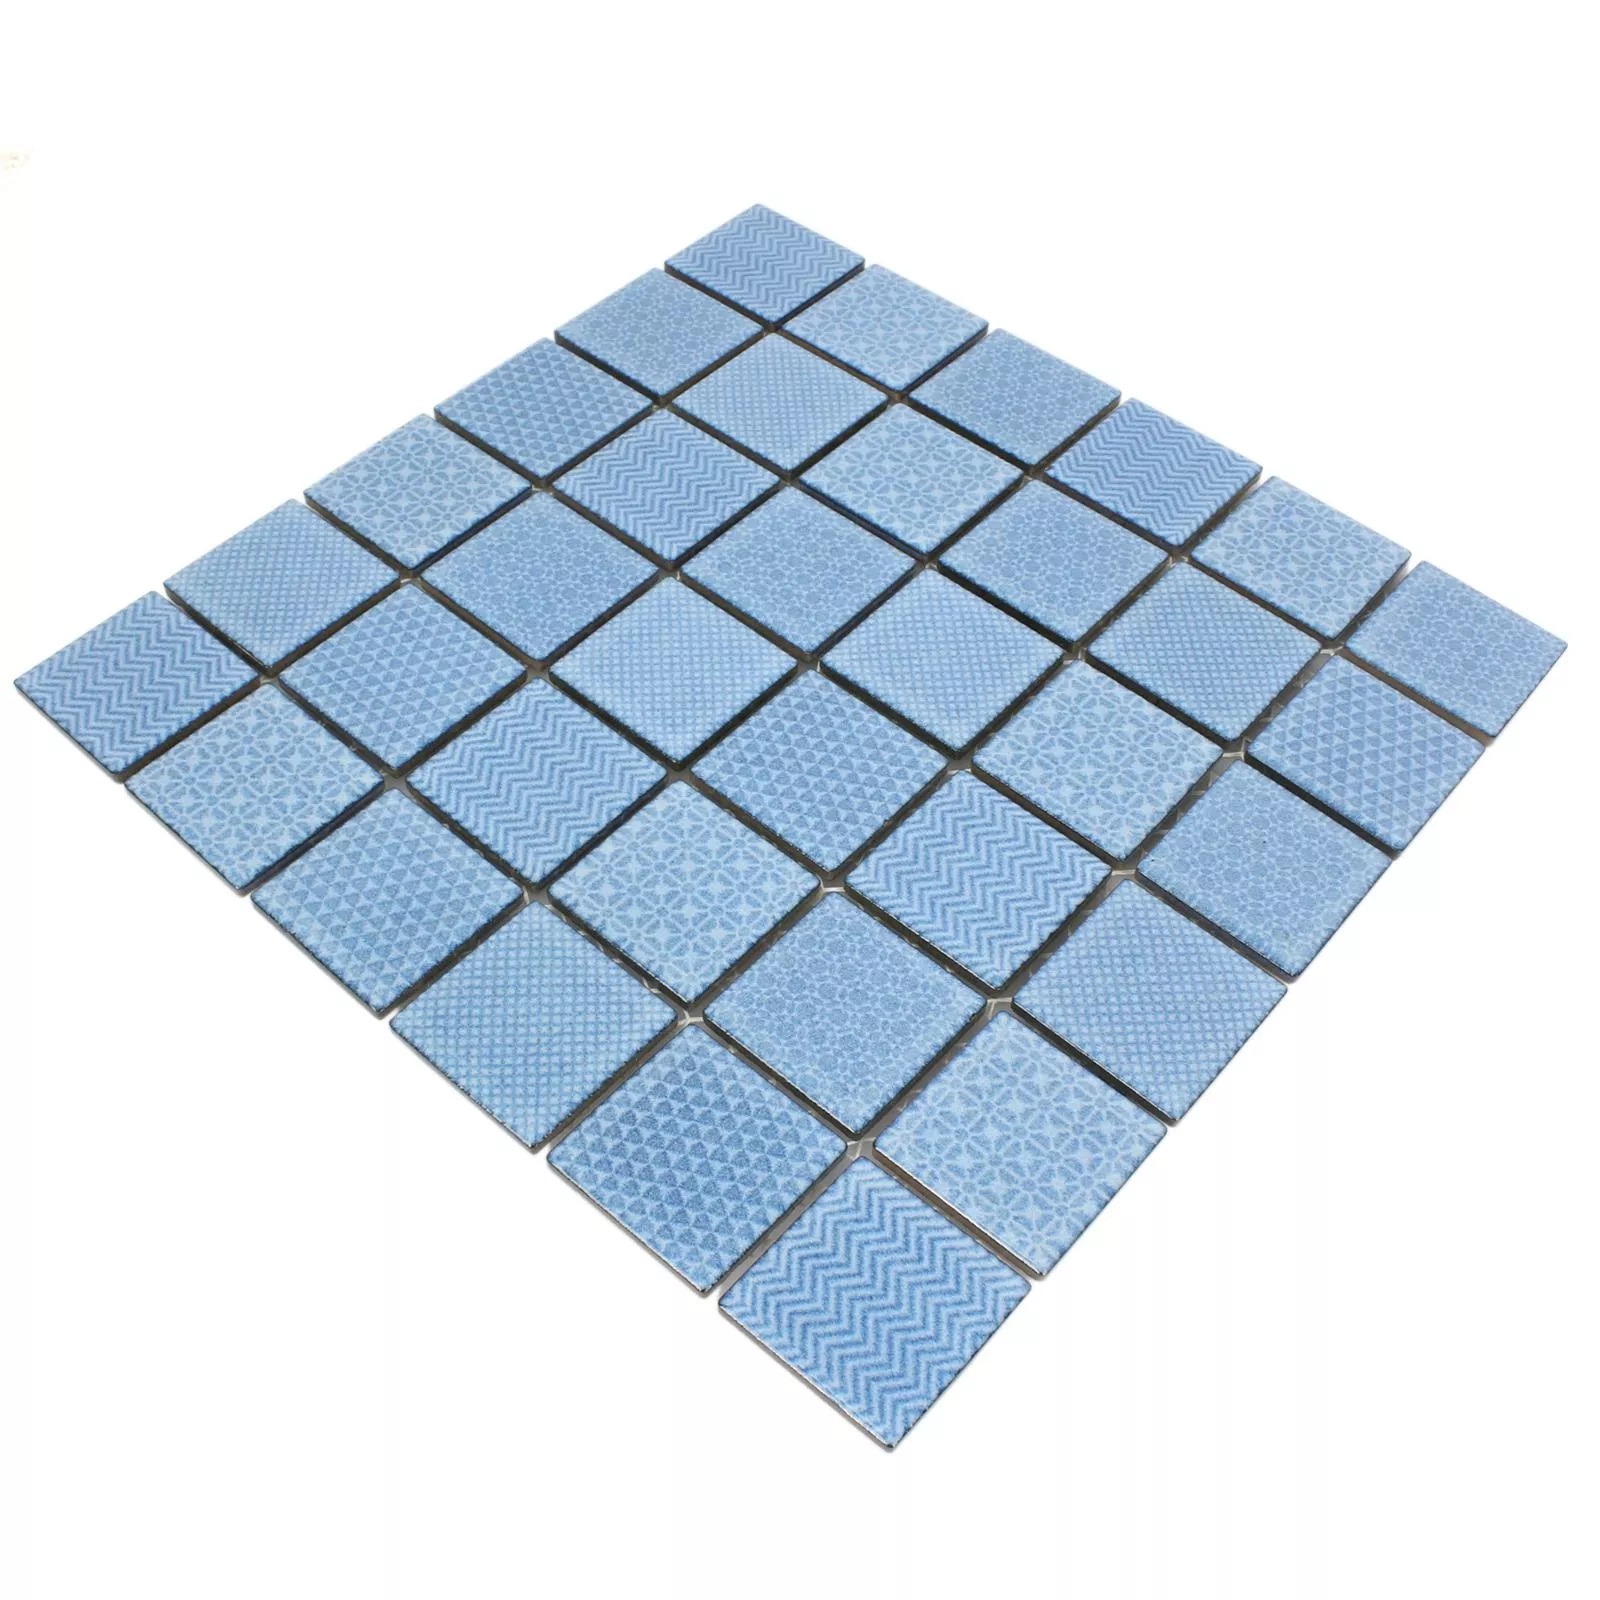 Mosaic Tiles Ceramic Sapporo Blue